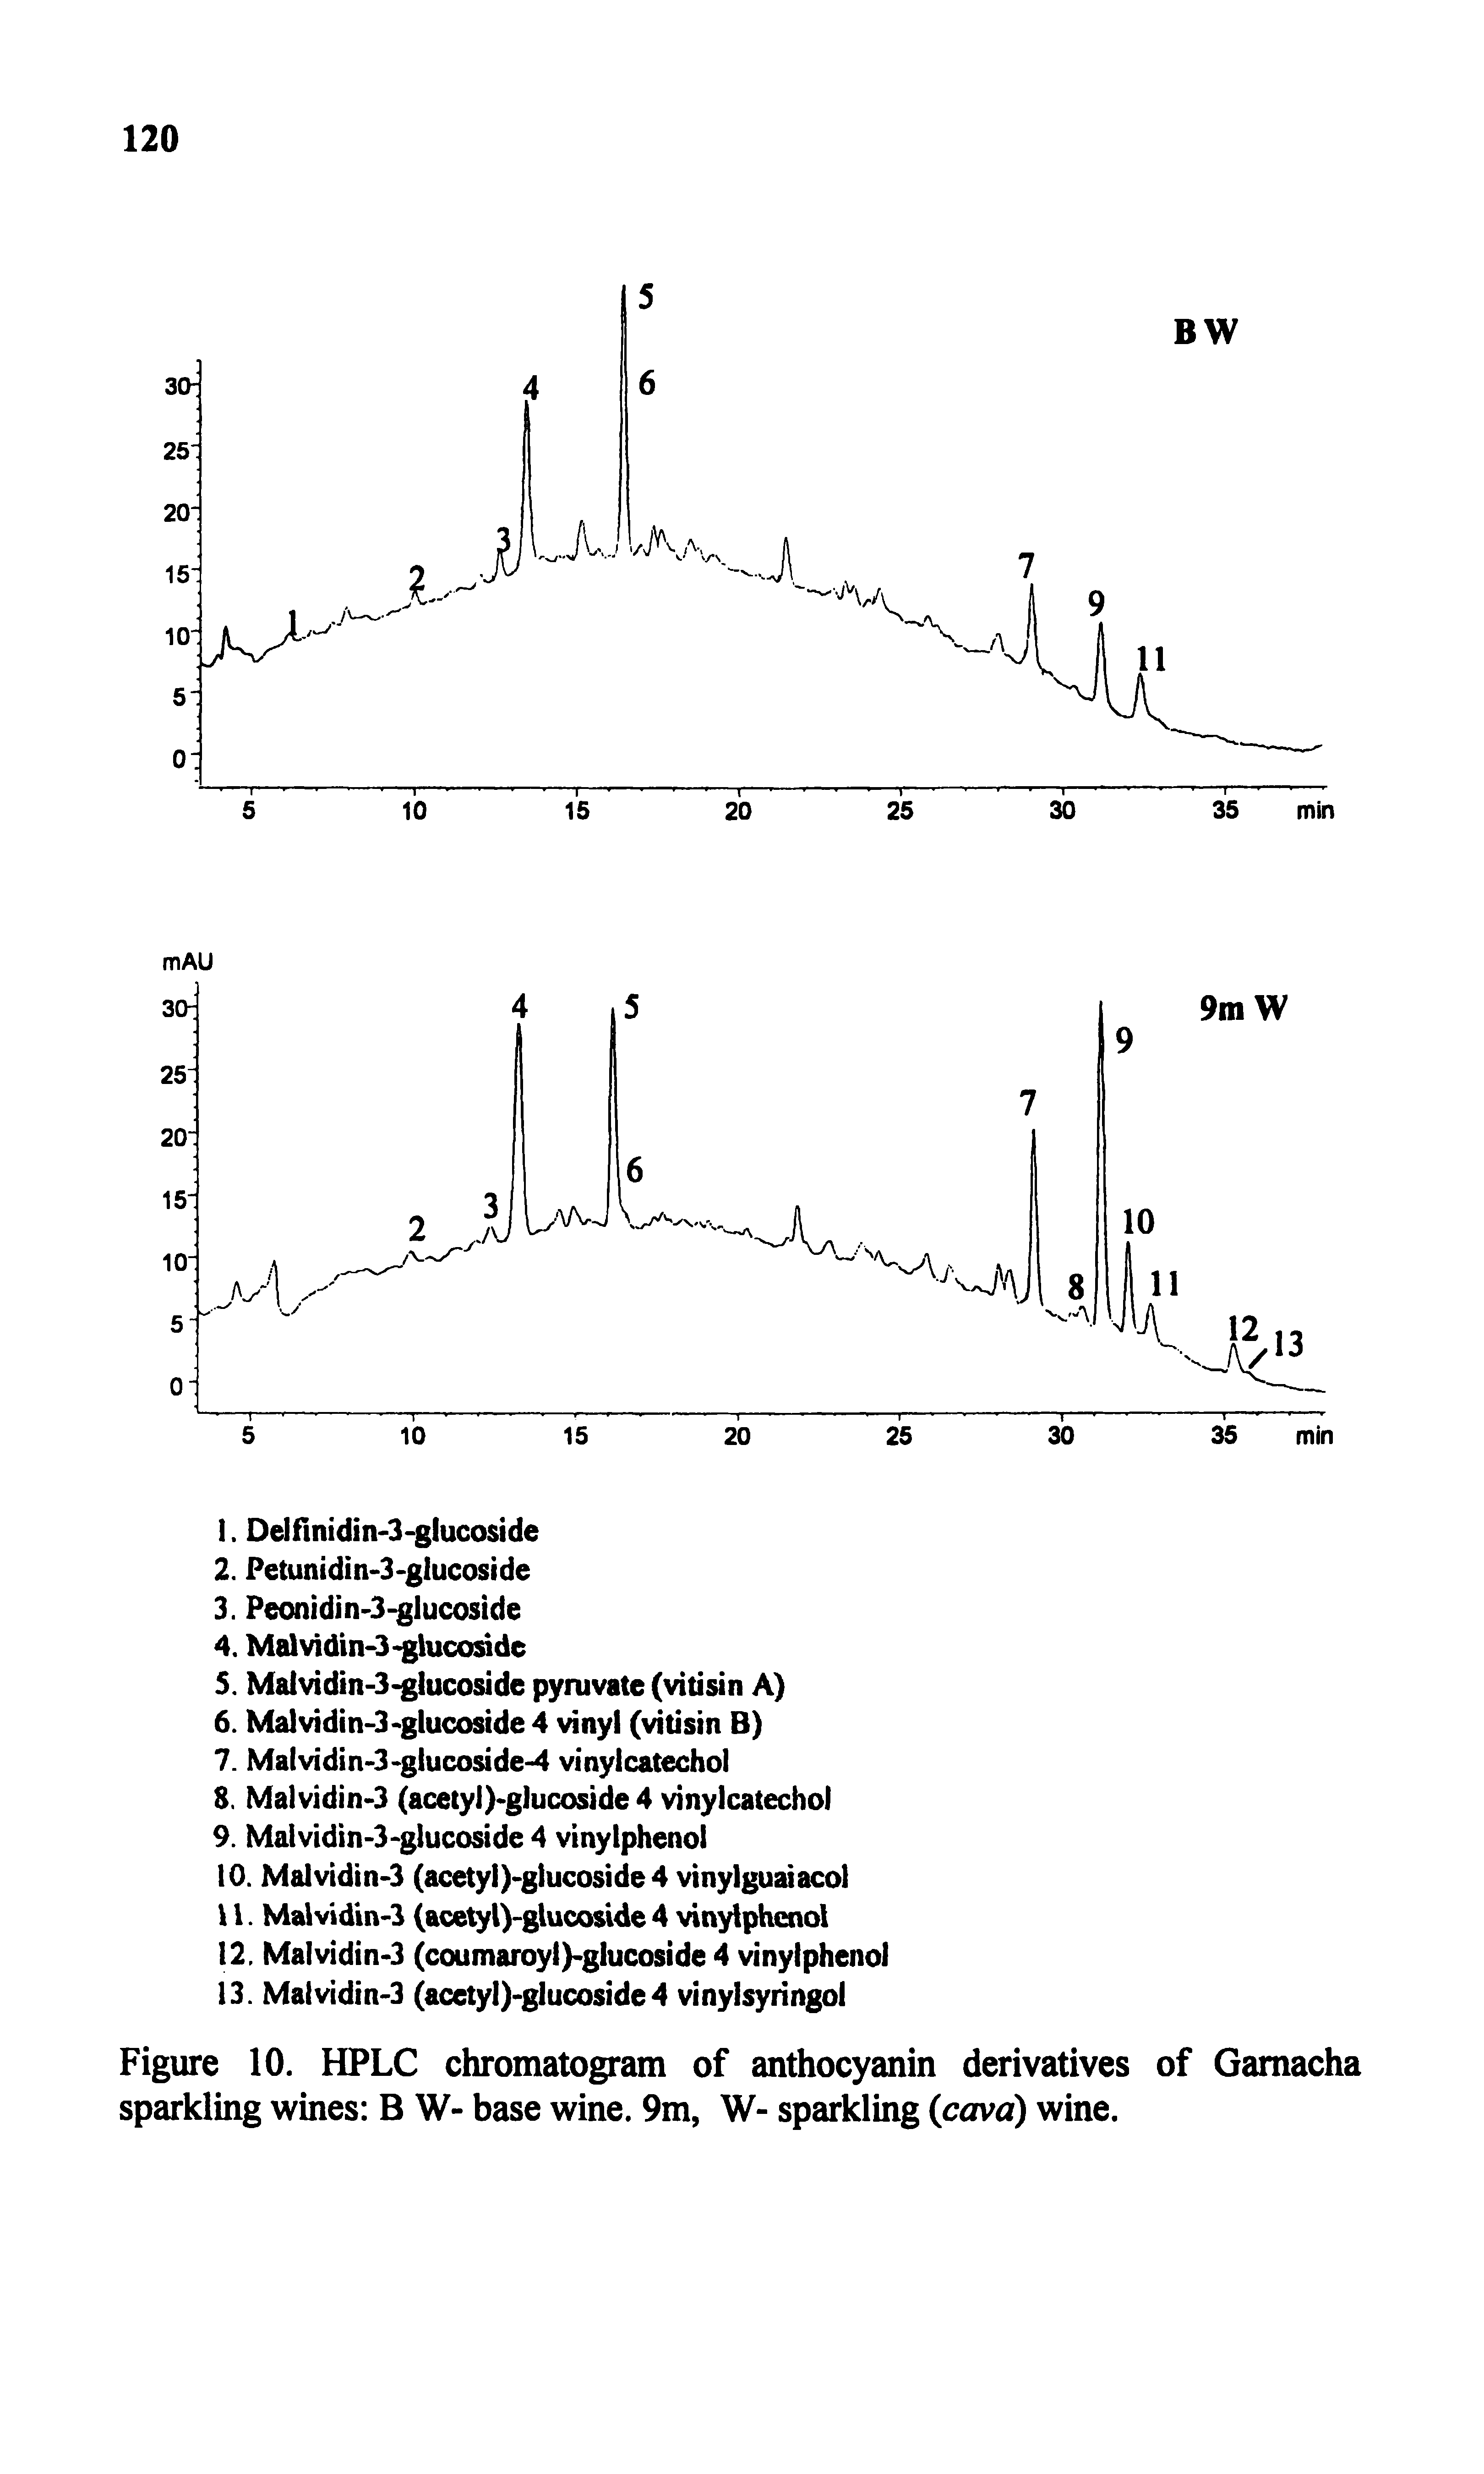 Figure 10. HPLC chromatogram of anthocyanin derivatives of Gamacha sparkling wines B W- base wine. 9m, W- sparkling (cava) wine.